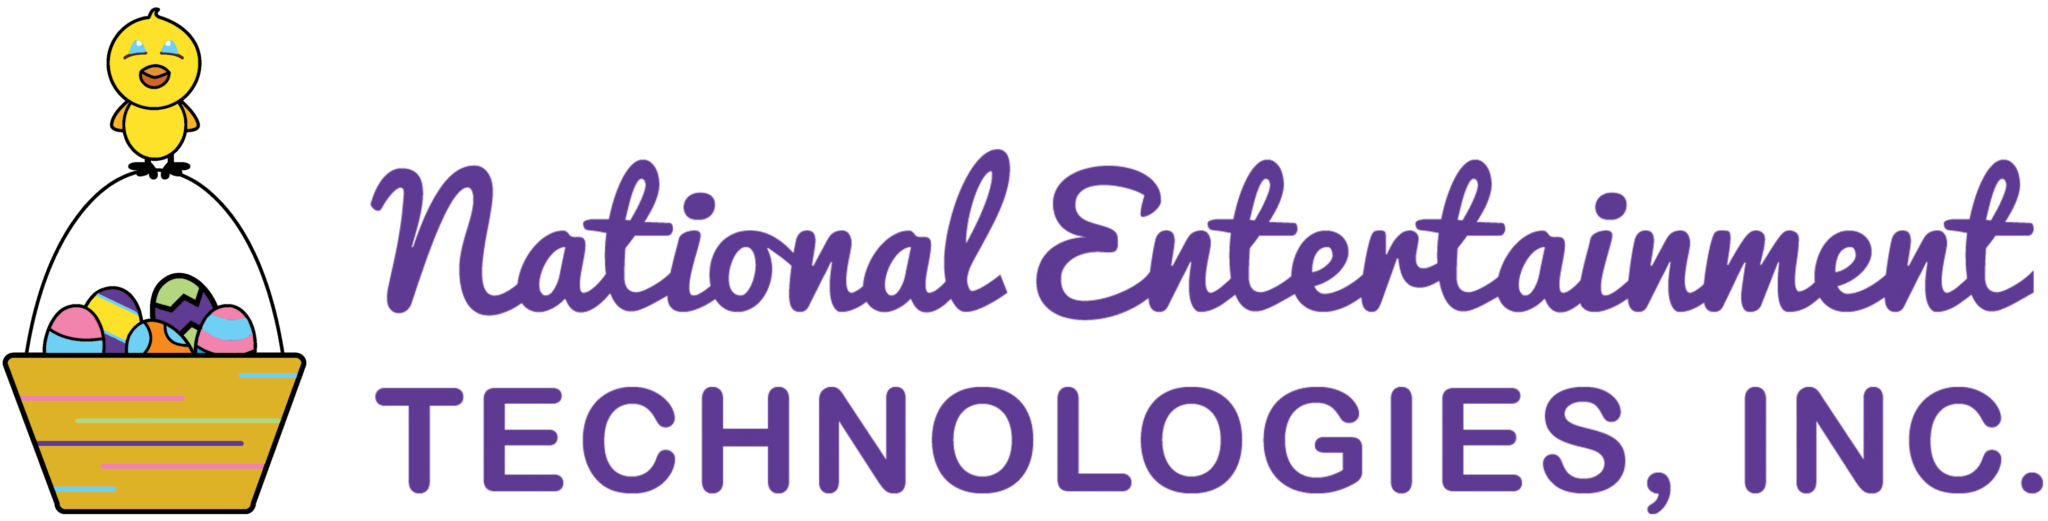 National Entertainment Technologies, Inc.